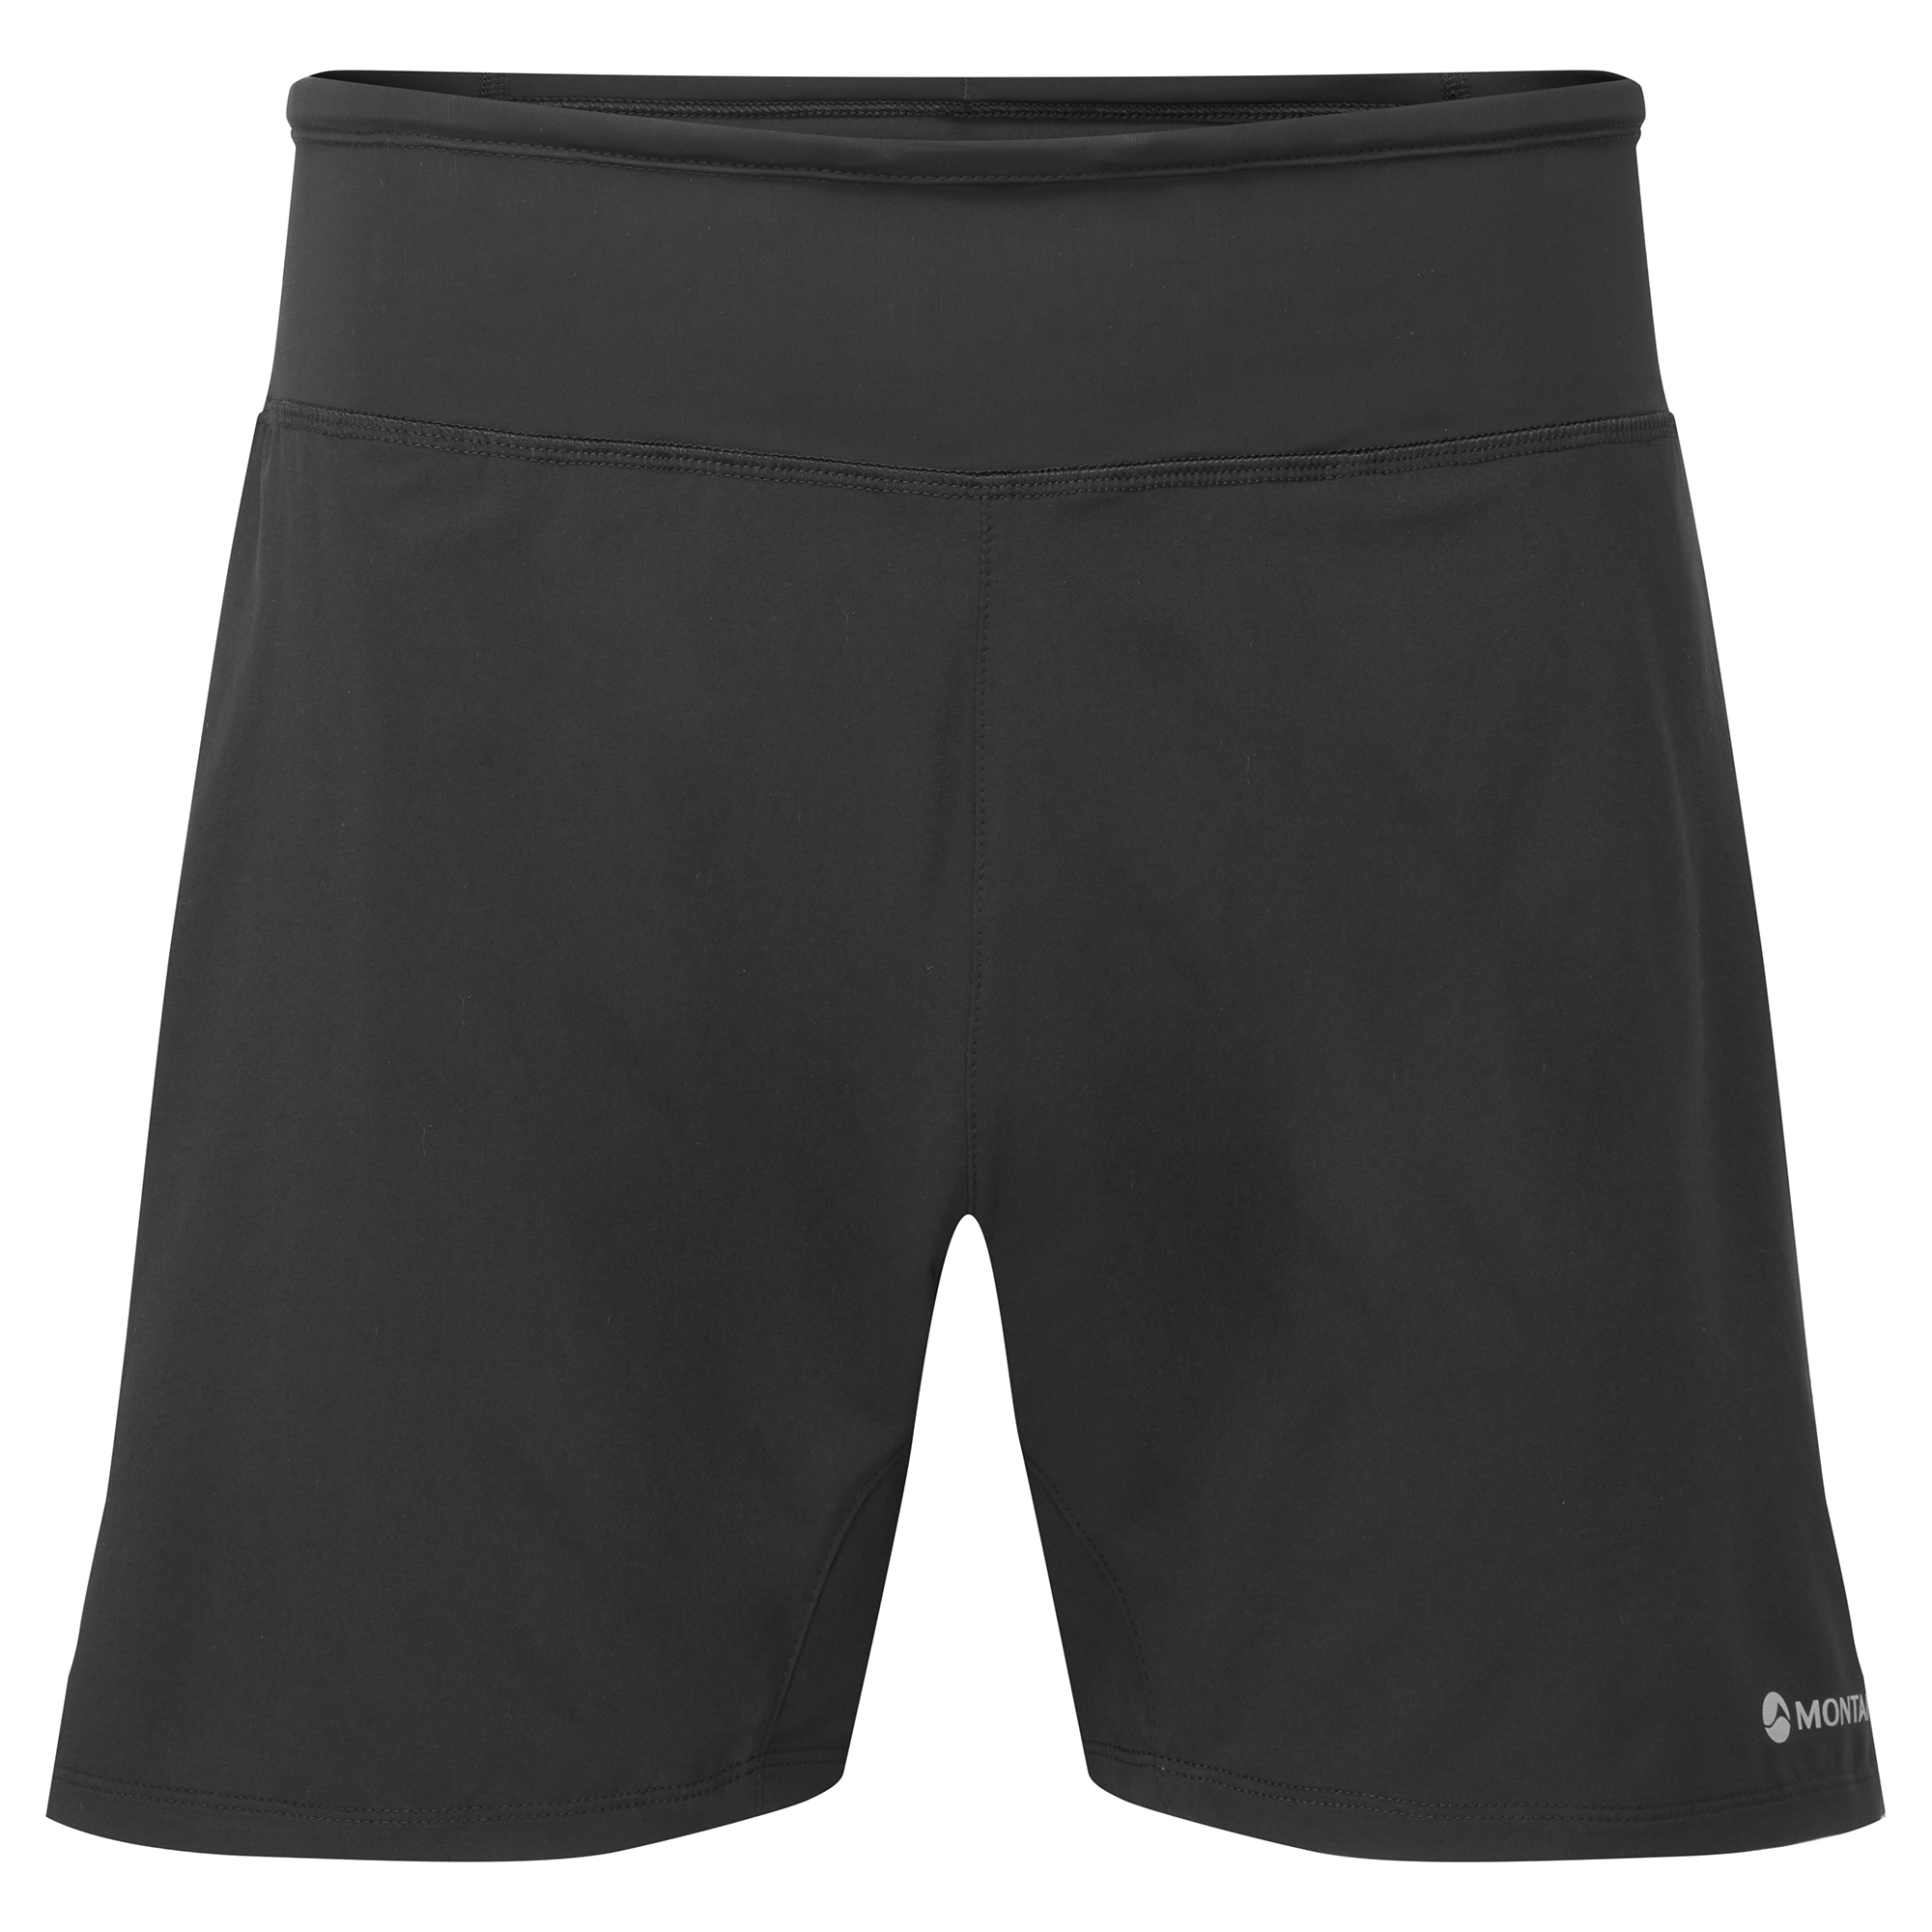 Montane pánské kraťasy Slipstream 5" Shorts Barva: black, Velikost: S